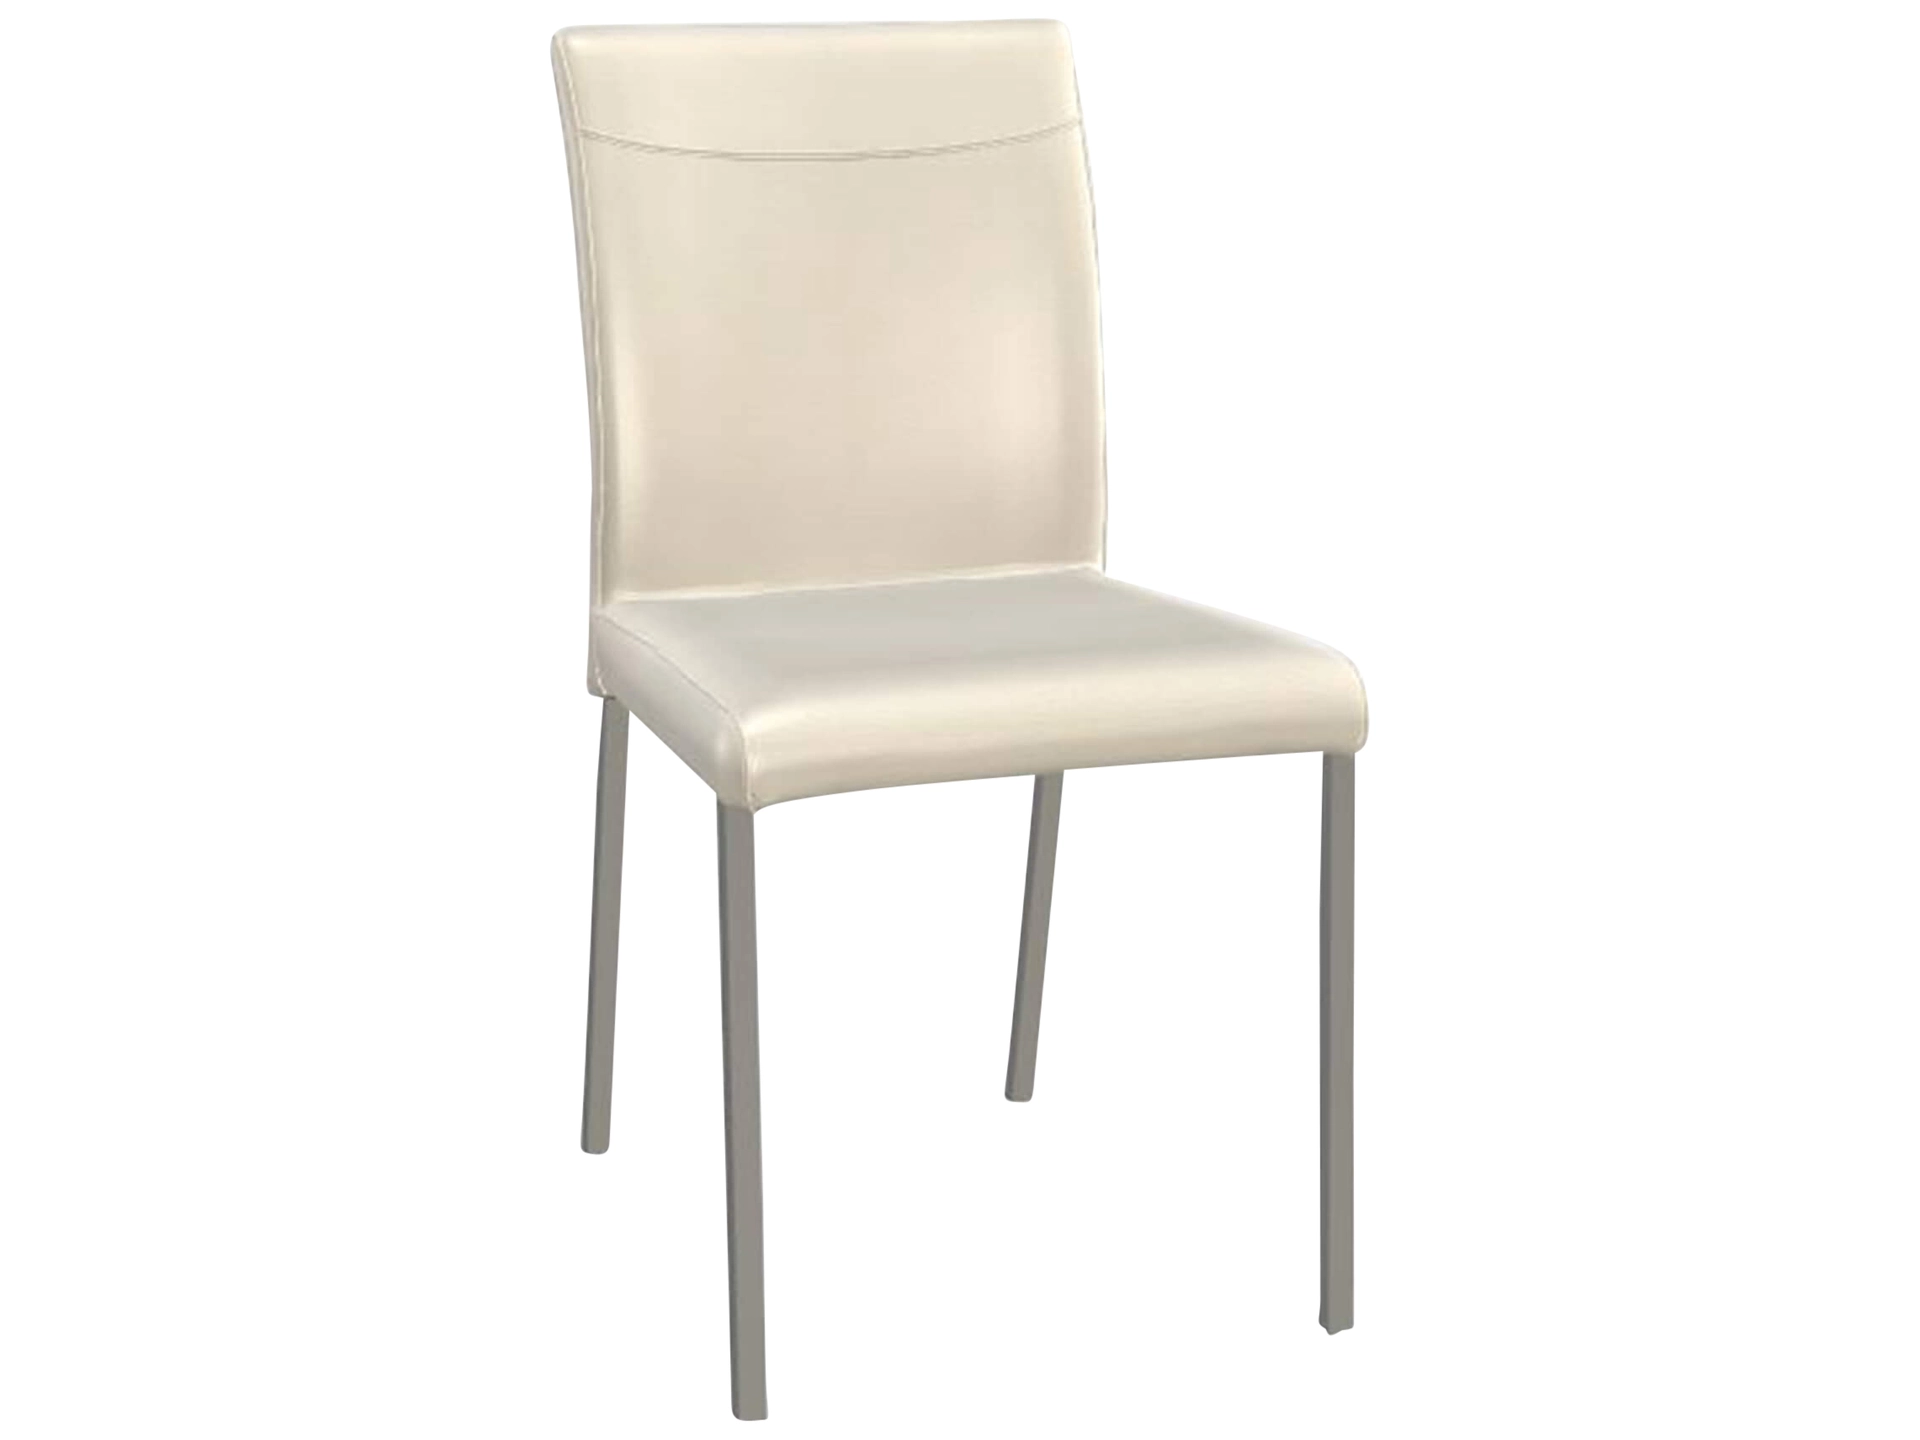 Stuhl Leicht Premium Trendstühle / Farbe: Bianco / Material: Leder